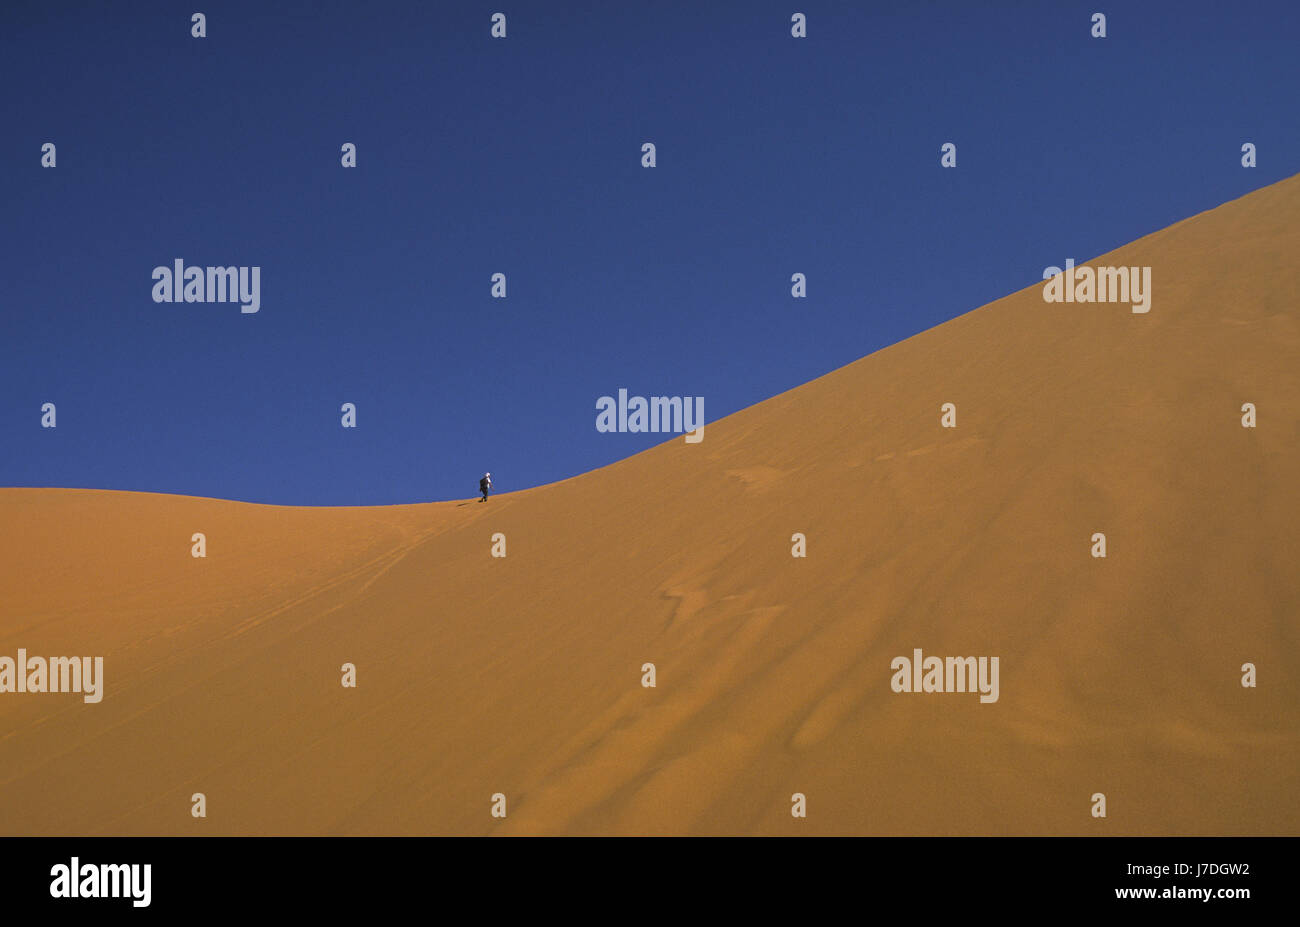 12.11.2010, Merzouga, Marokko, Afrika - ein Blick auf die Sanddünen des Erg Chebbi. Stockfoto